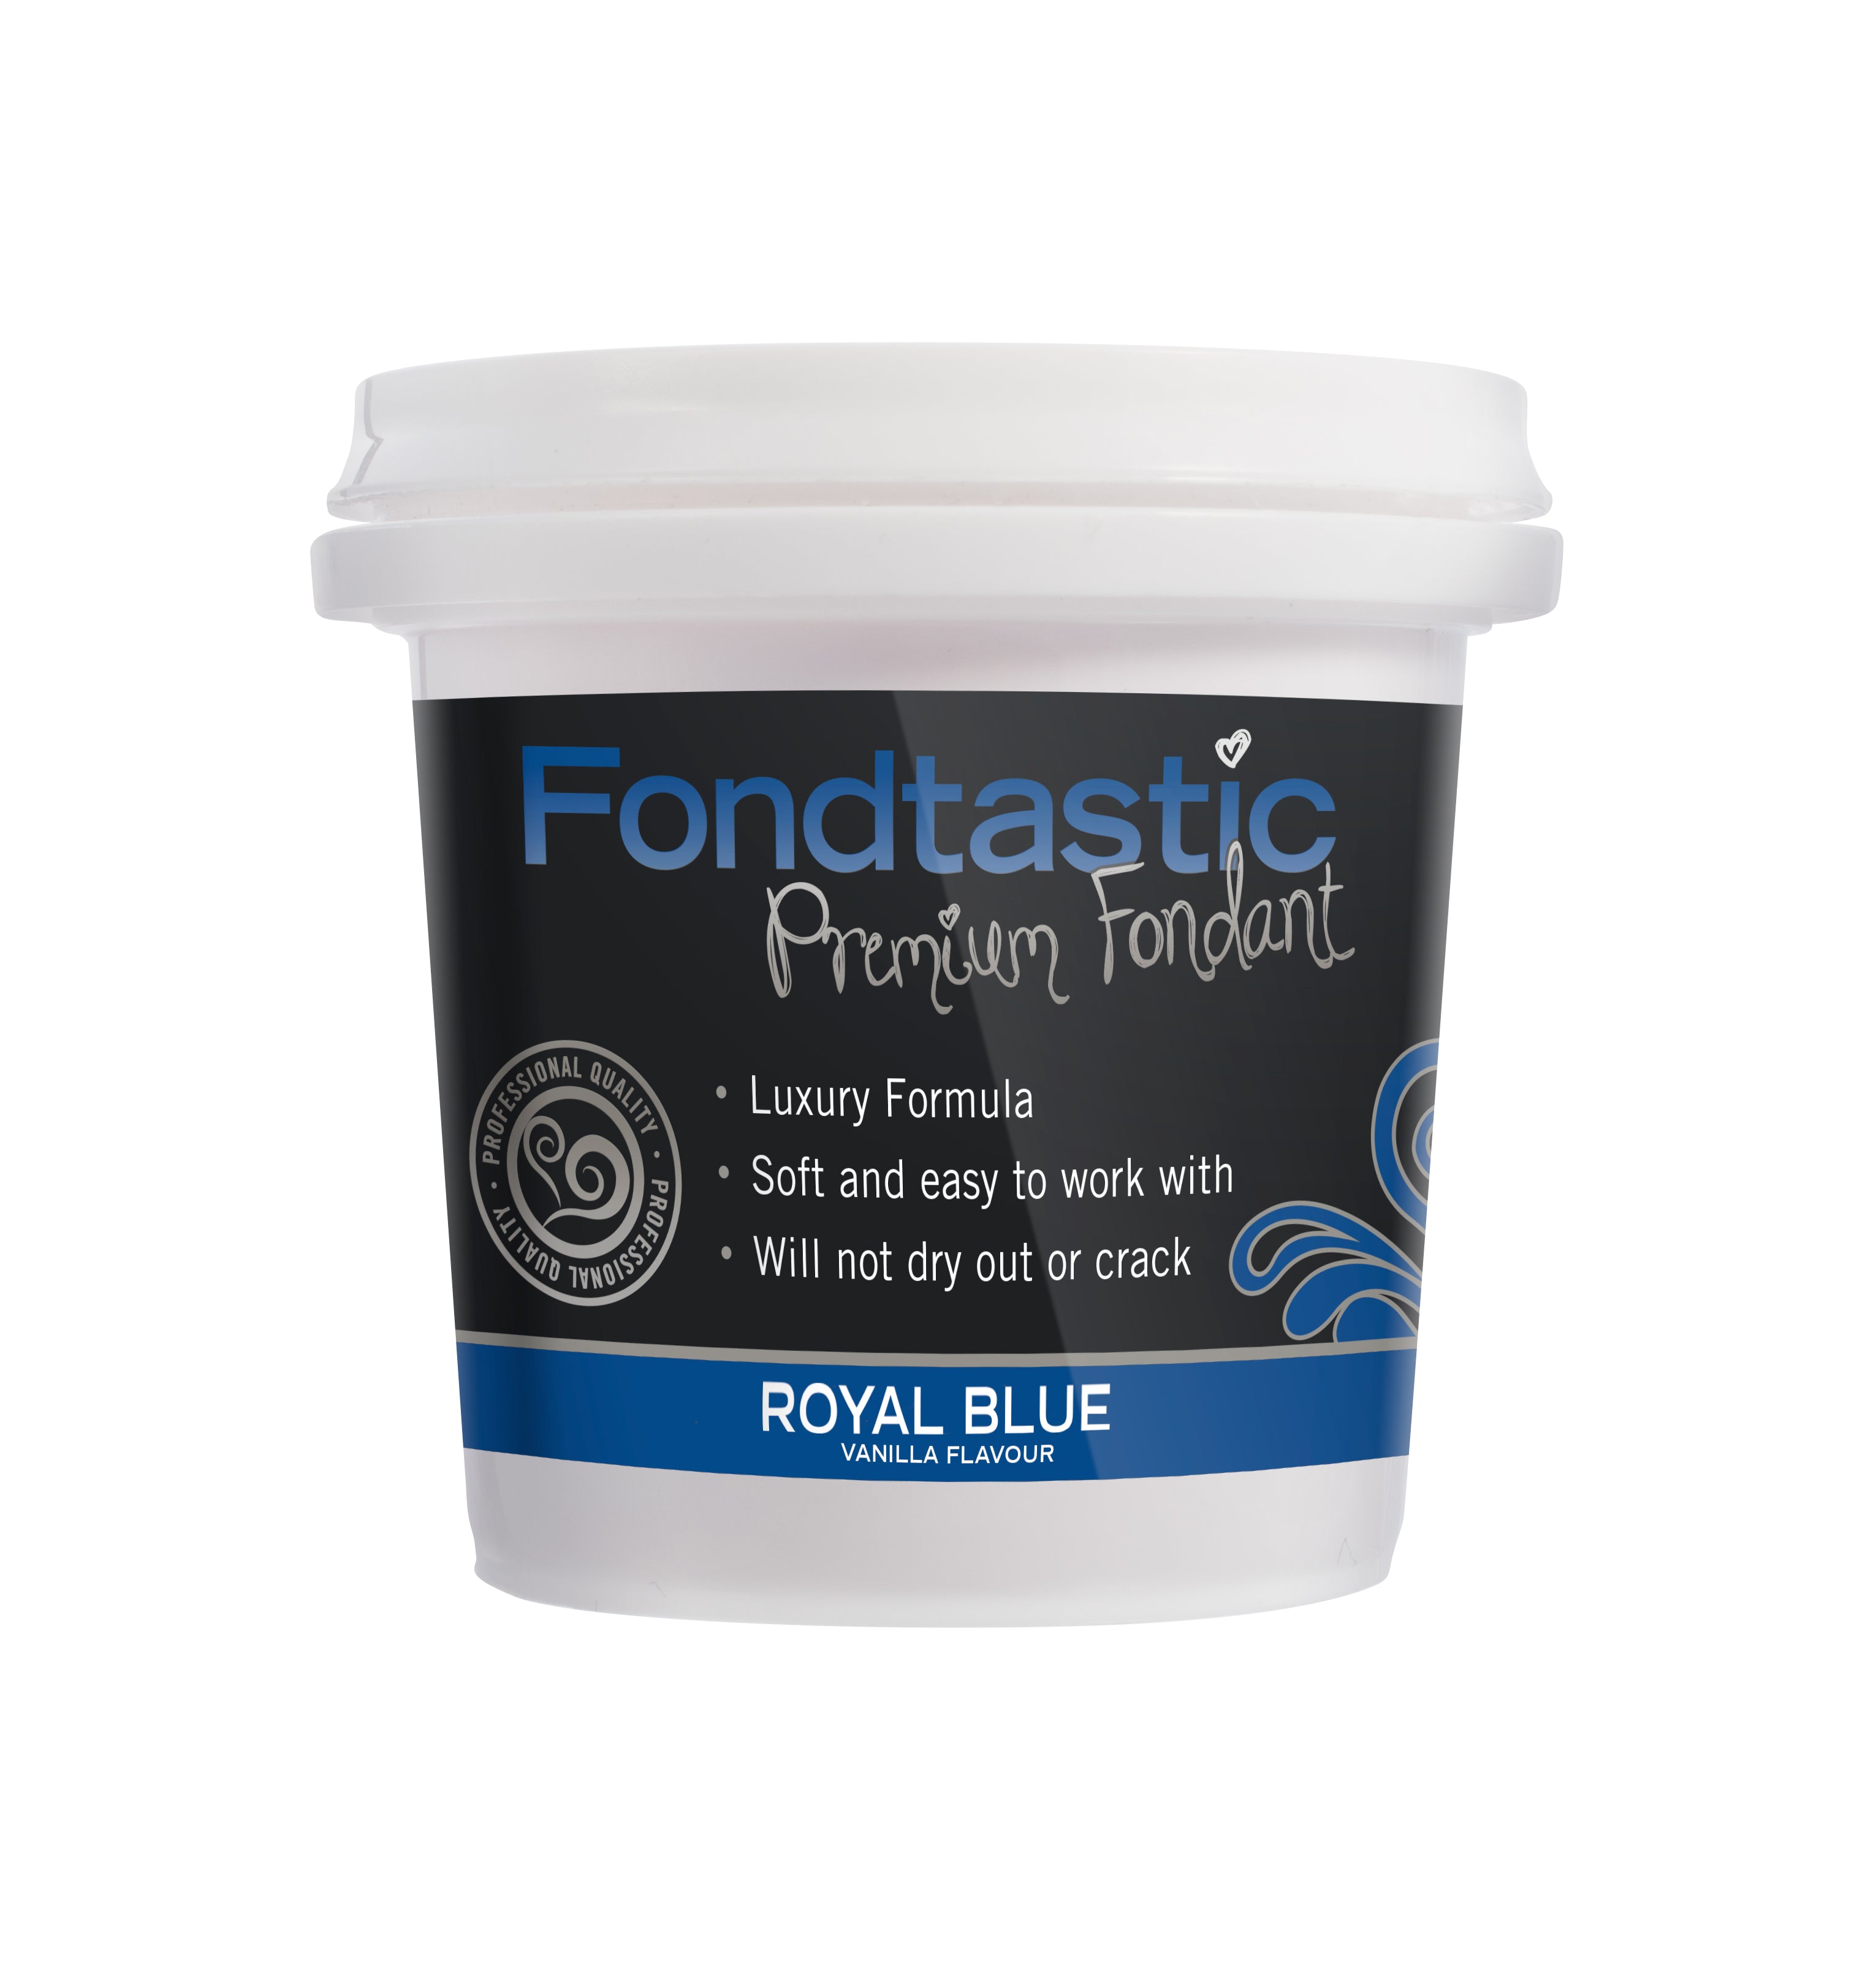 Fondtastic Premium Fondant - Royal Blue 225g